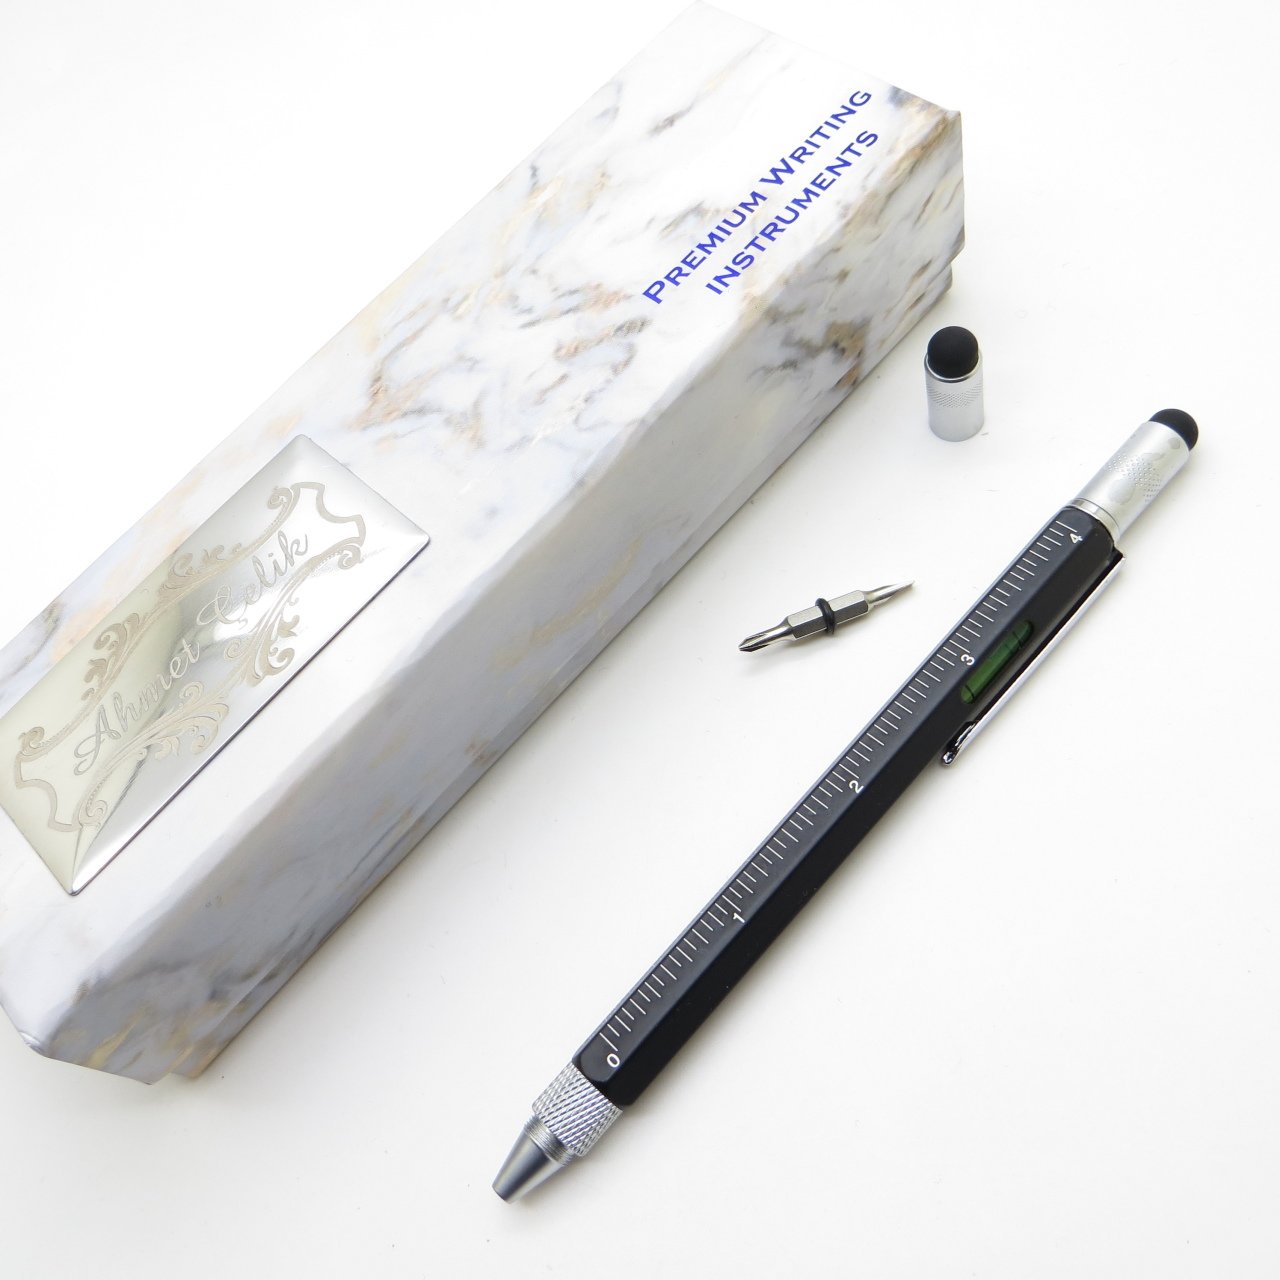 Wings Marble T470 Siyah Krom Construction Mühendis Kalemi - Su Terazisi + Cetvel + Tornavida + Touch Pen | İsme Özel Kalem | Hediyelik Kalem